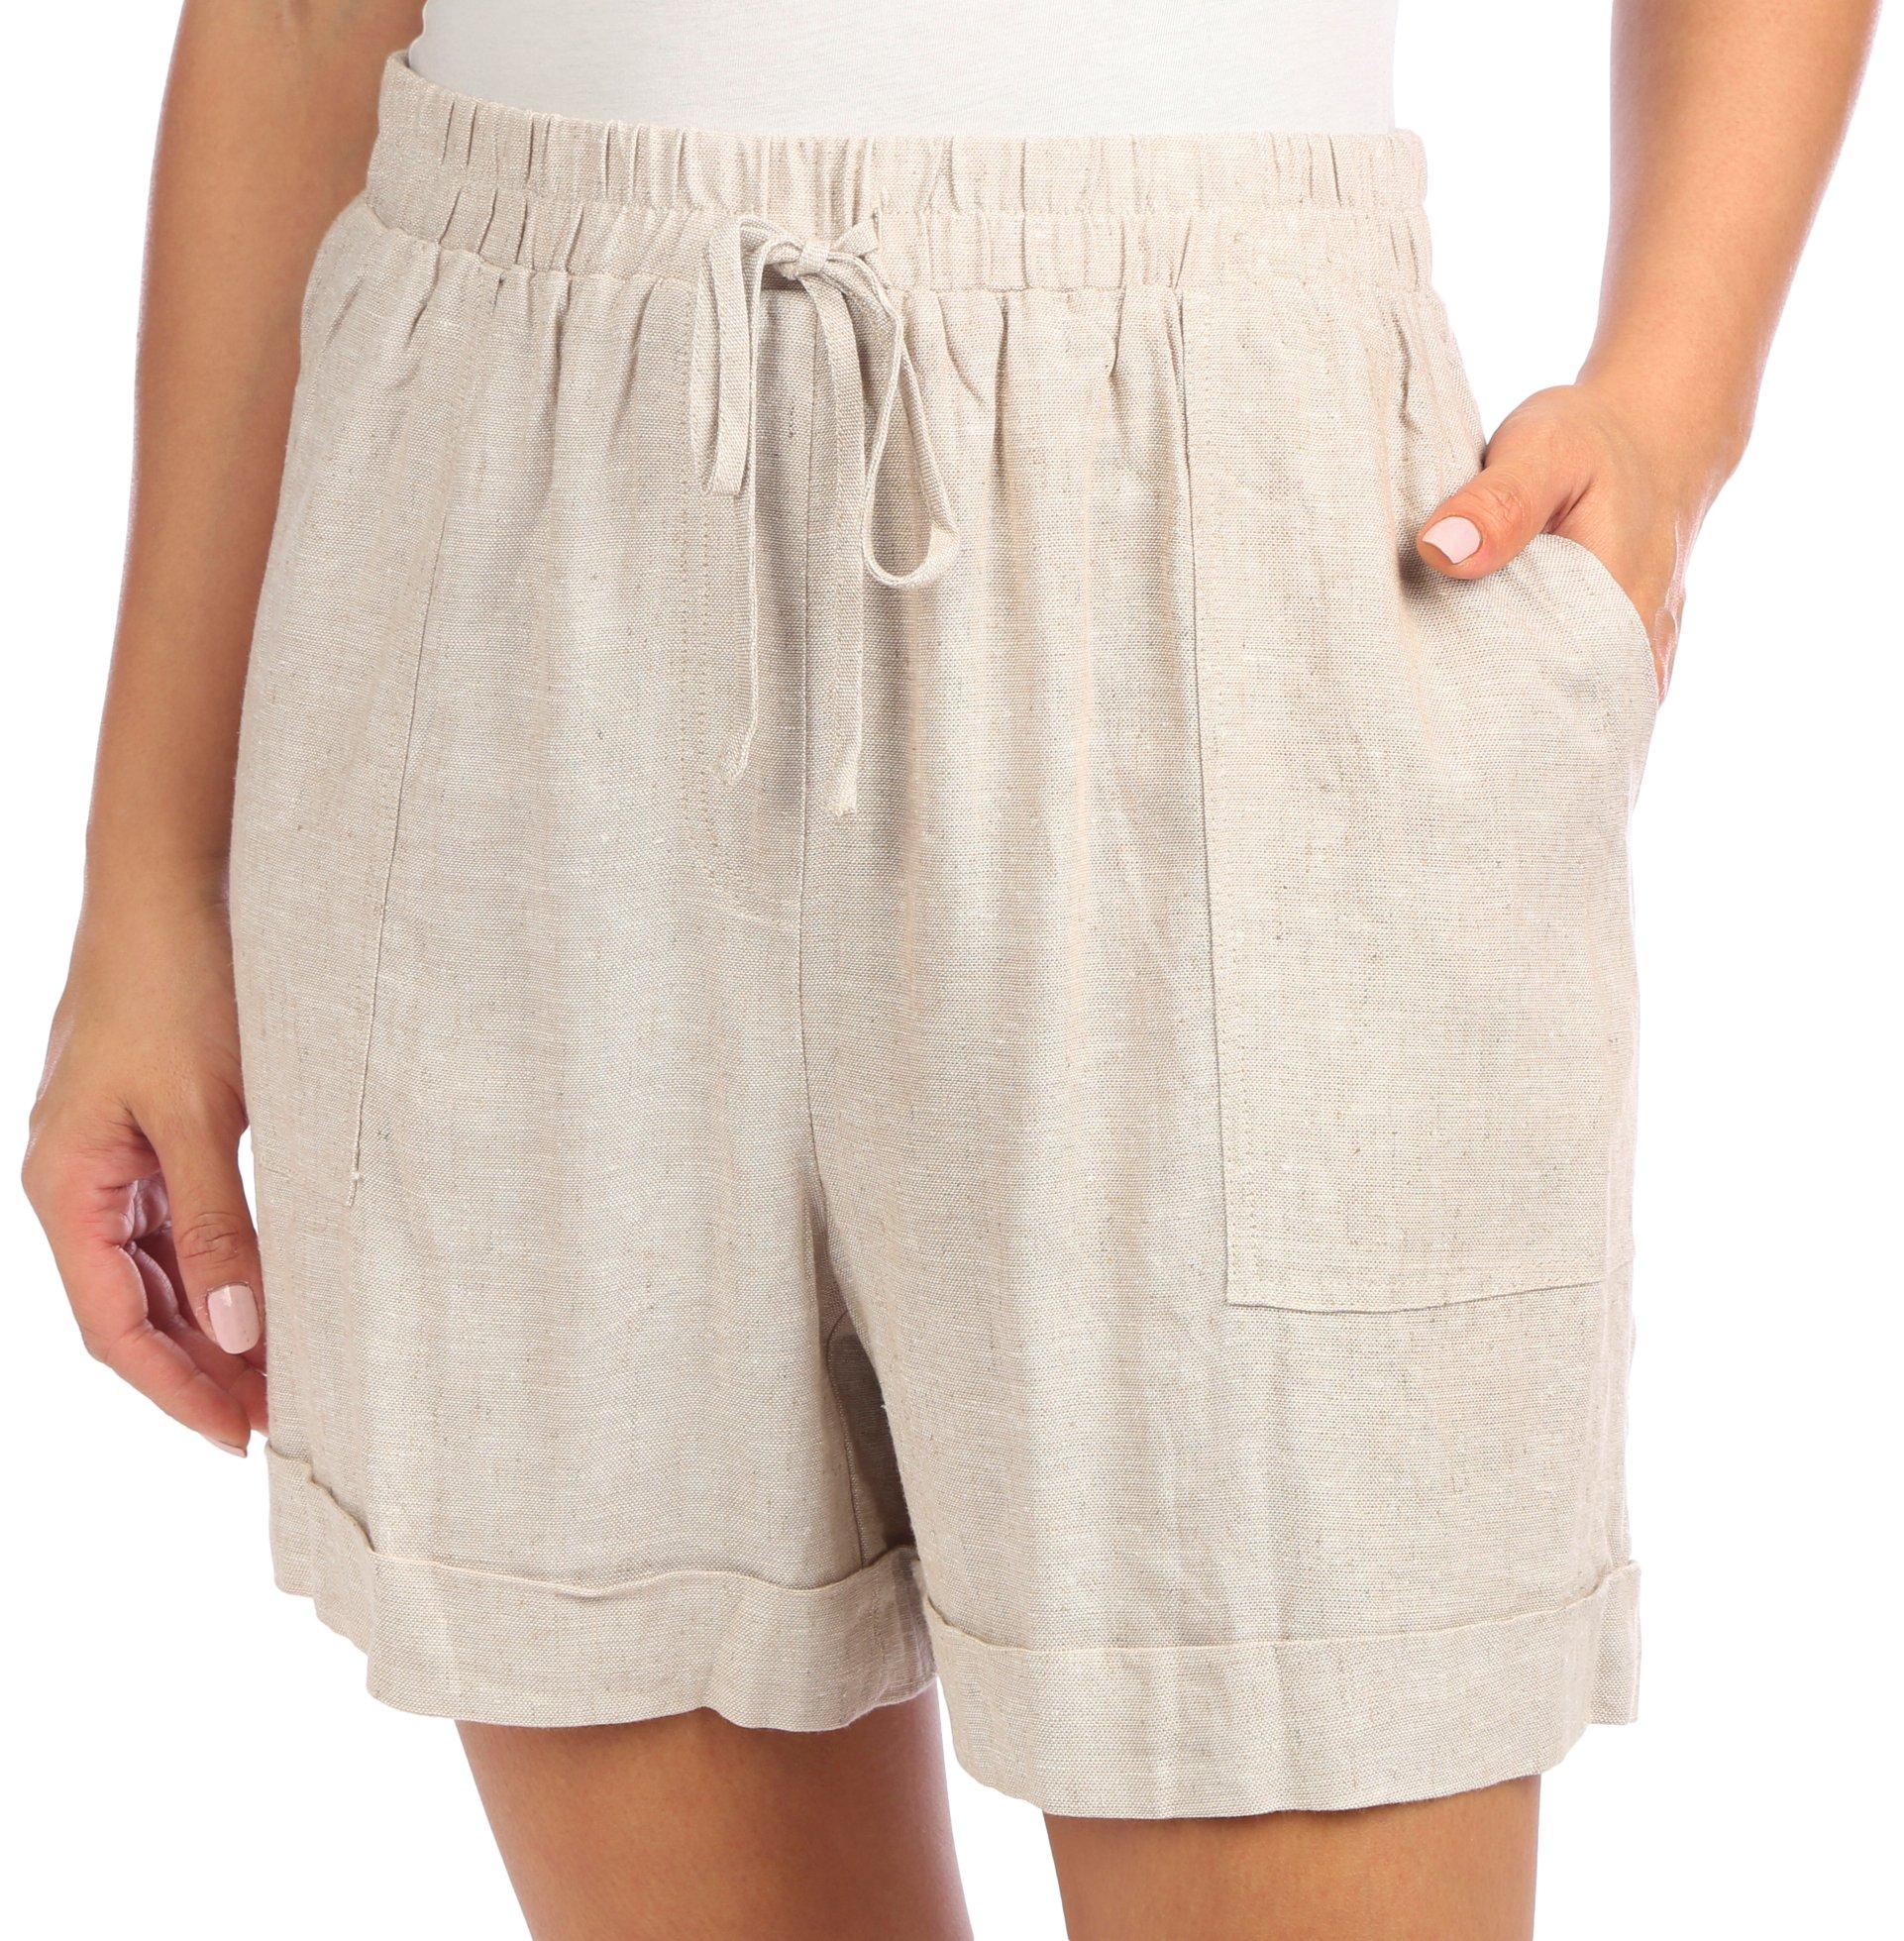 Womens Solid Drawstring Linen Shorts